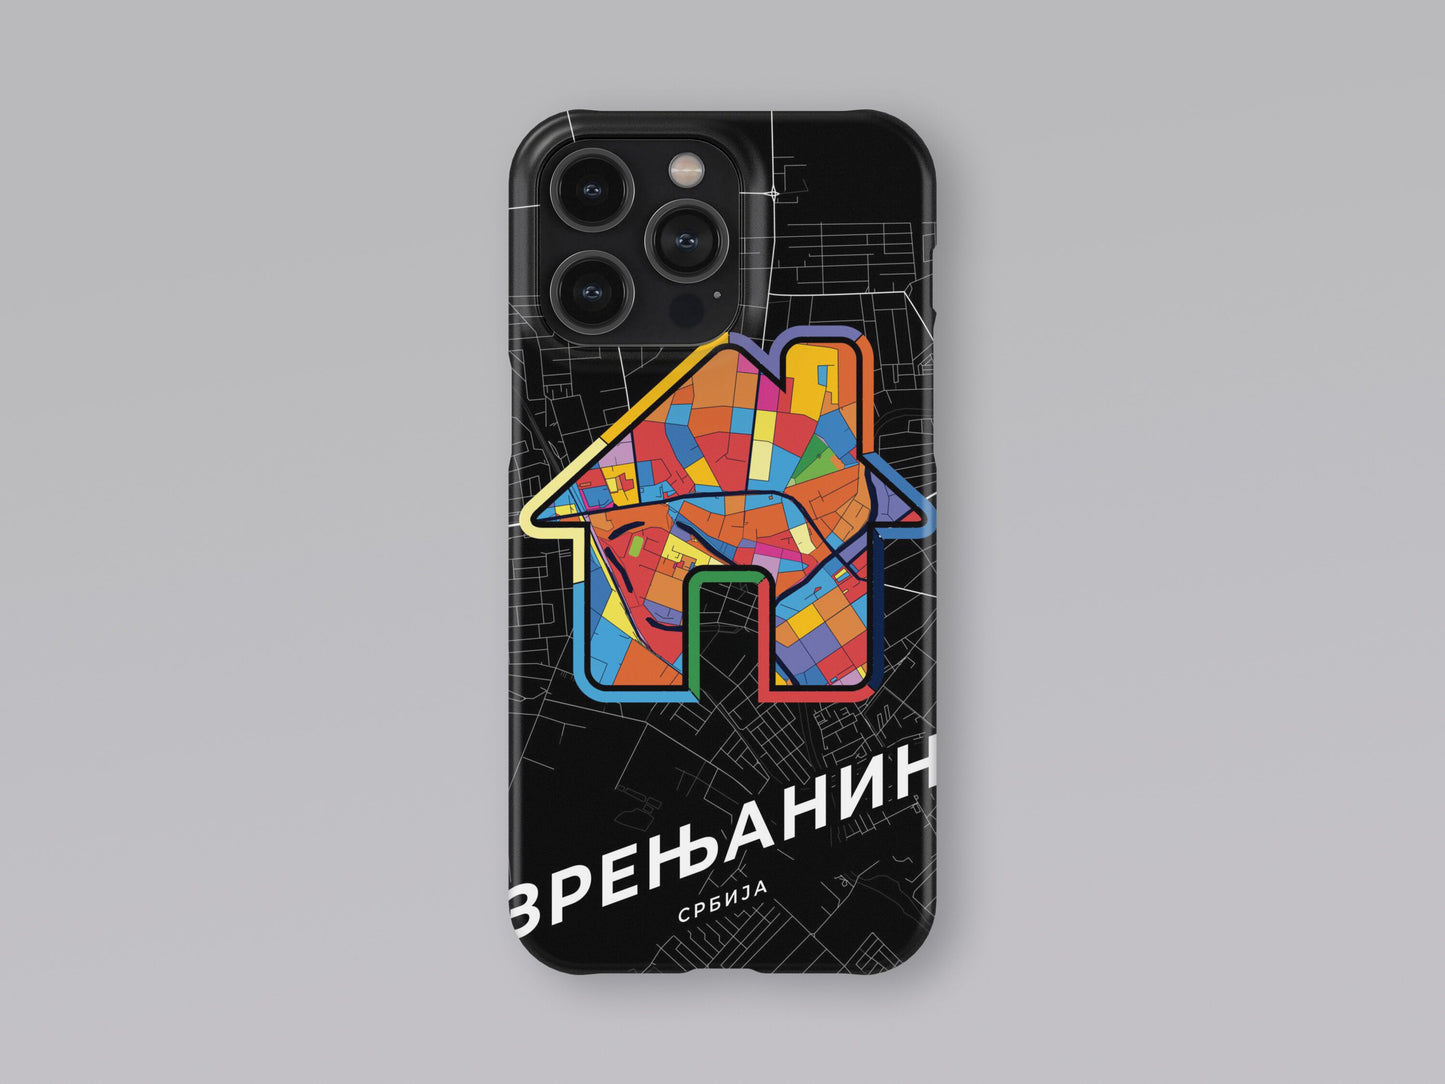 Zrenjanin Serbia slim phone case with colorful icon 3